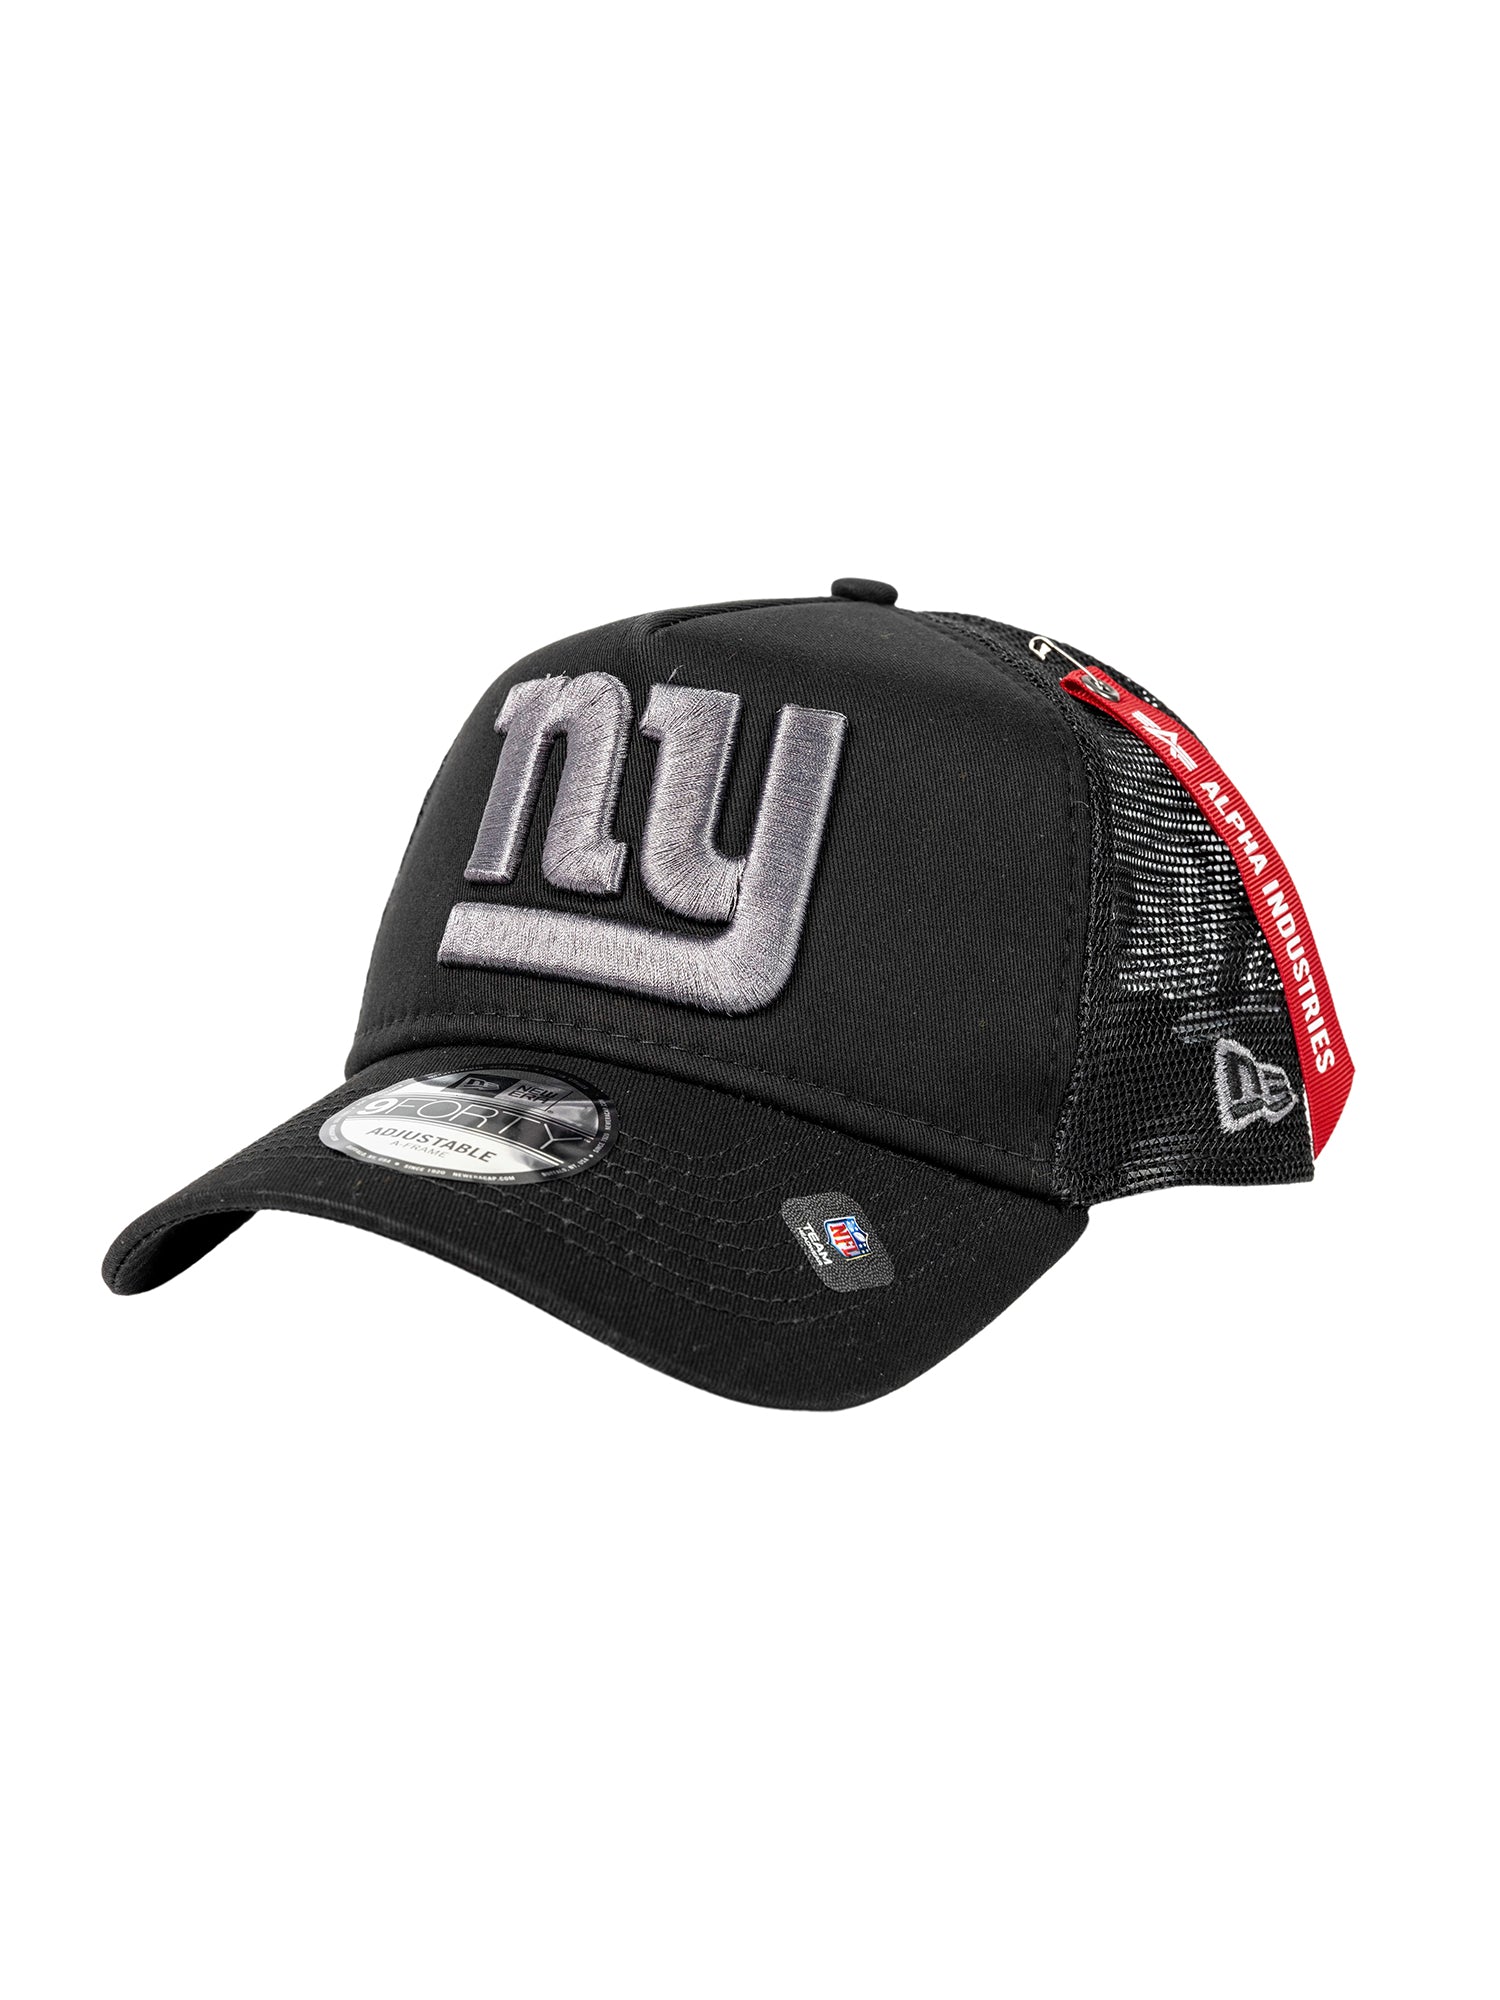 new york giants trucker hat